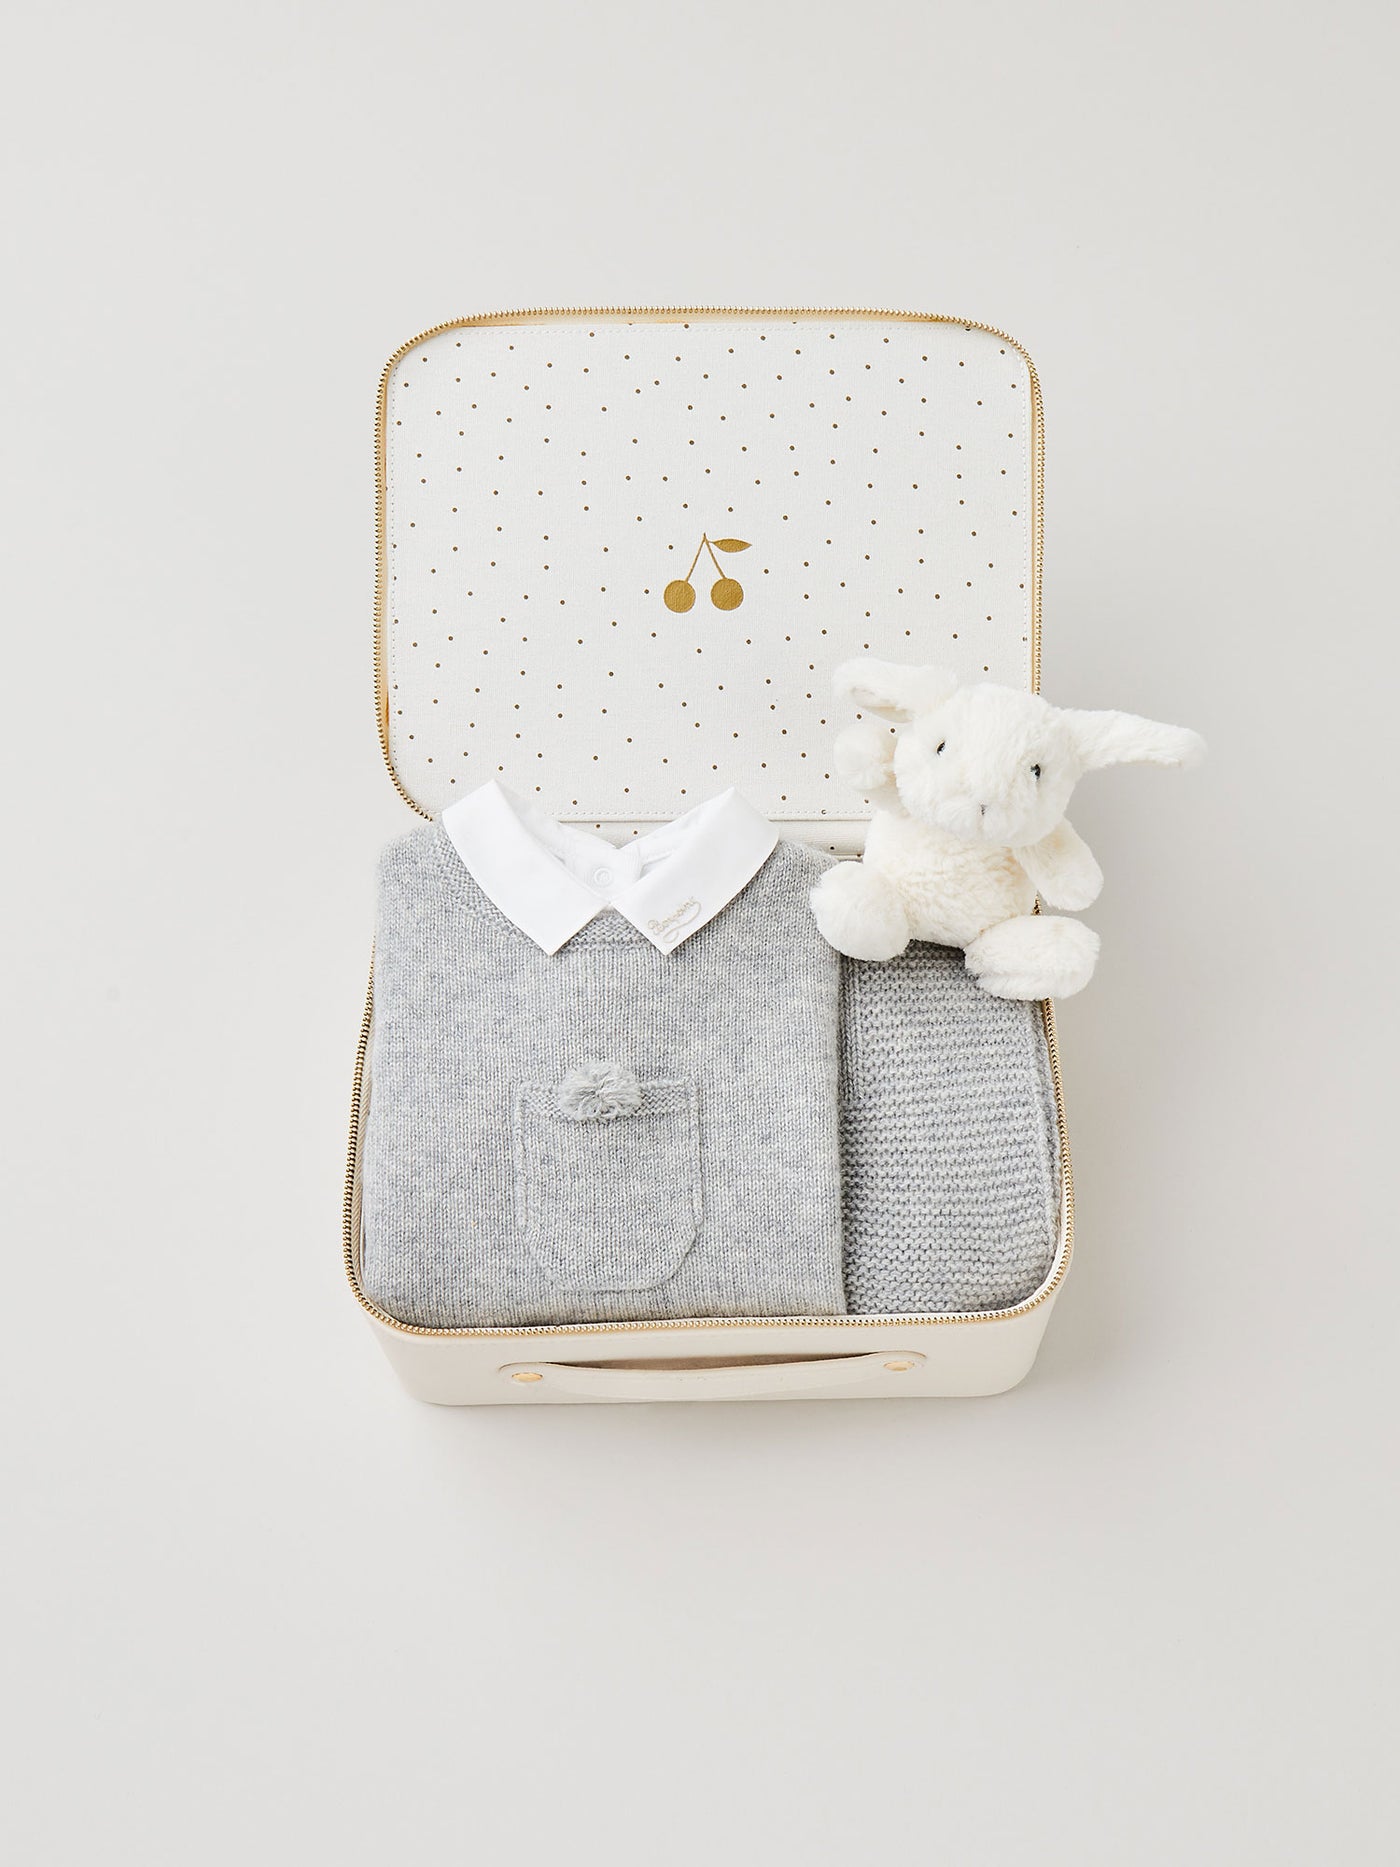 Newborn suitcase Grey Cashmere set